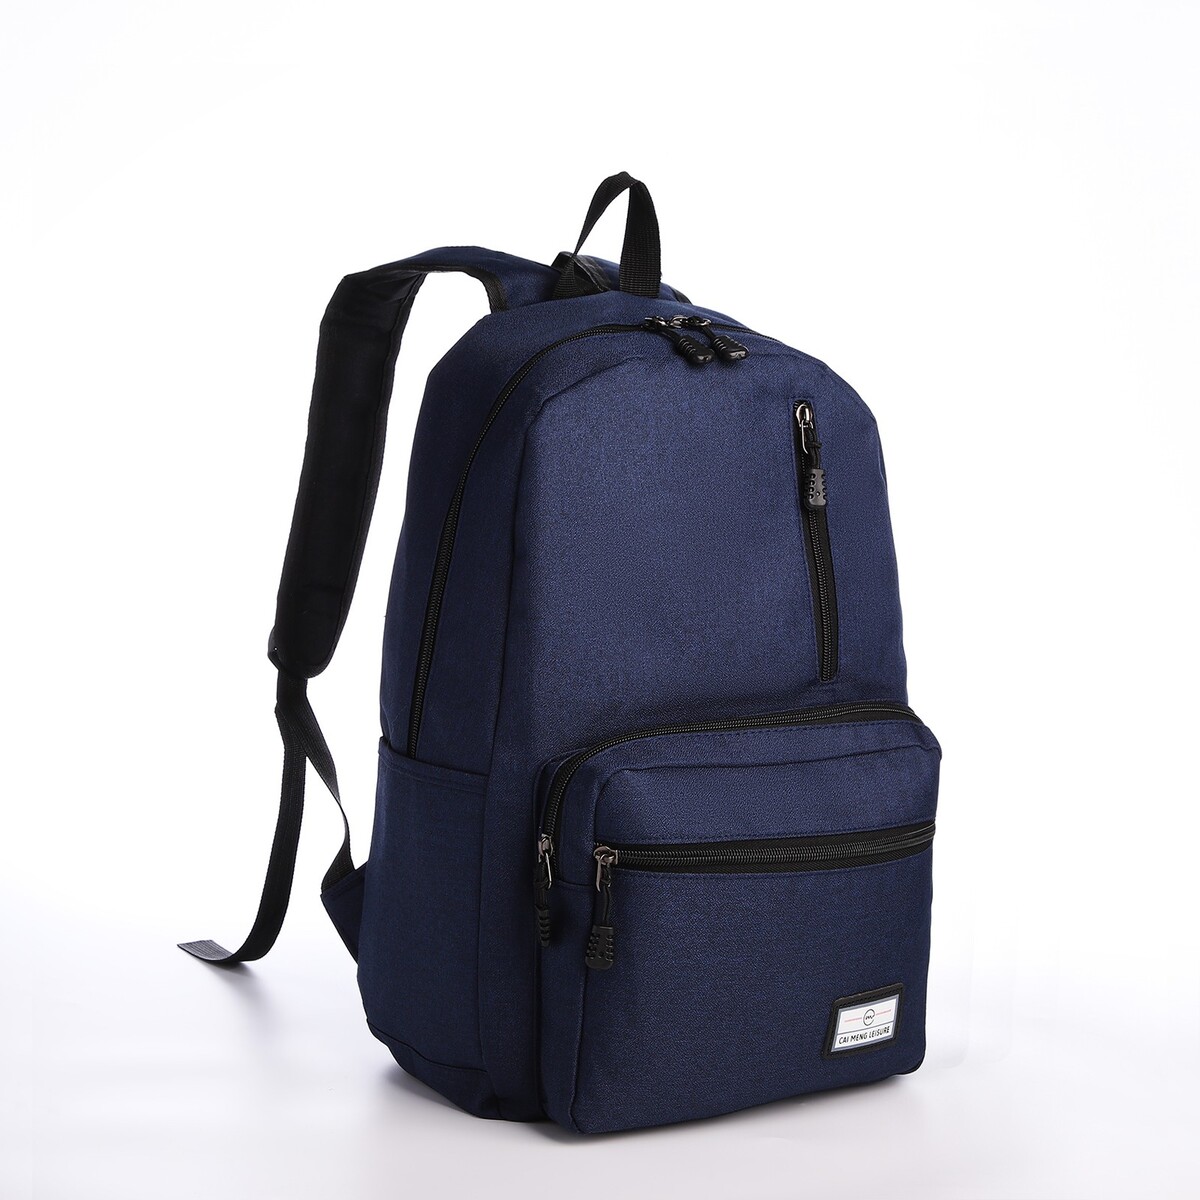 Рюкзак молодежный из текстиля на молнии, 5 карманов, usb, цвет синий рюкзак молодежный из текстиля на молнии 5 карманов синий